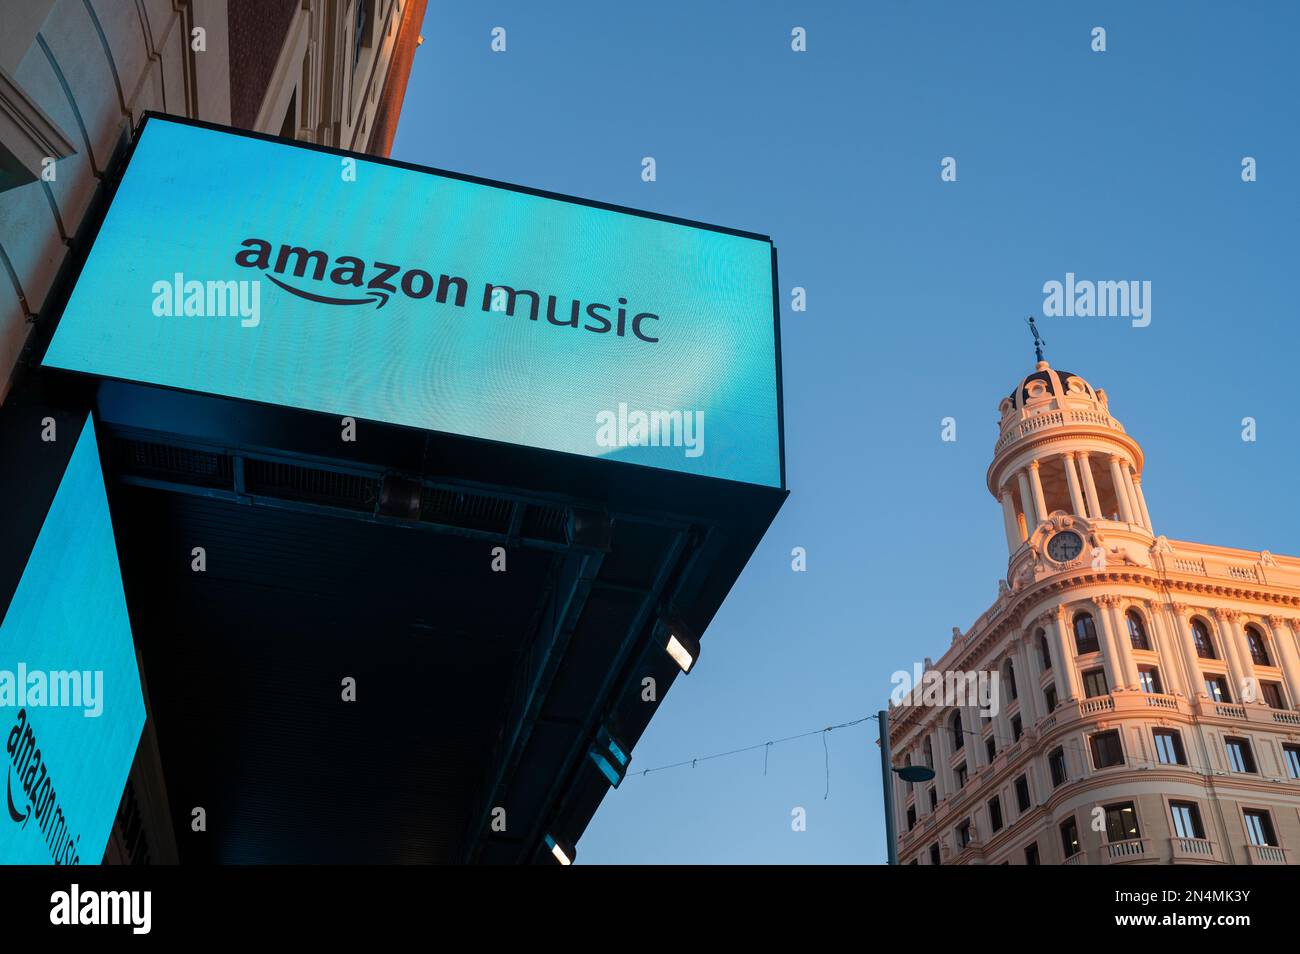 Amazon Music screen advertising in Gran Via, Madrid, Spain Stock Photo